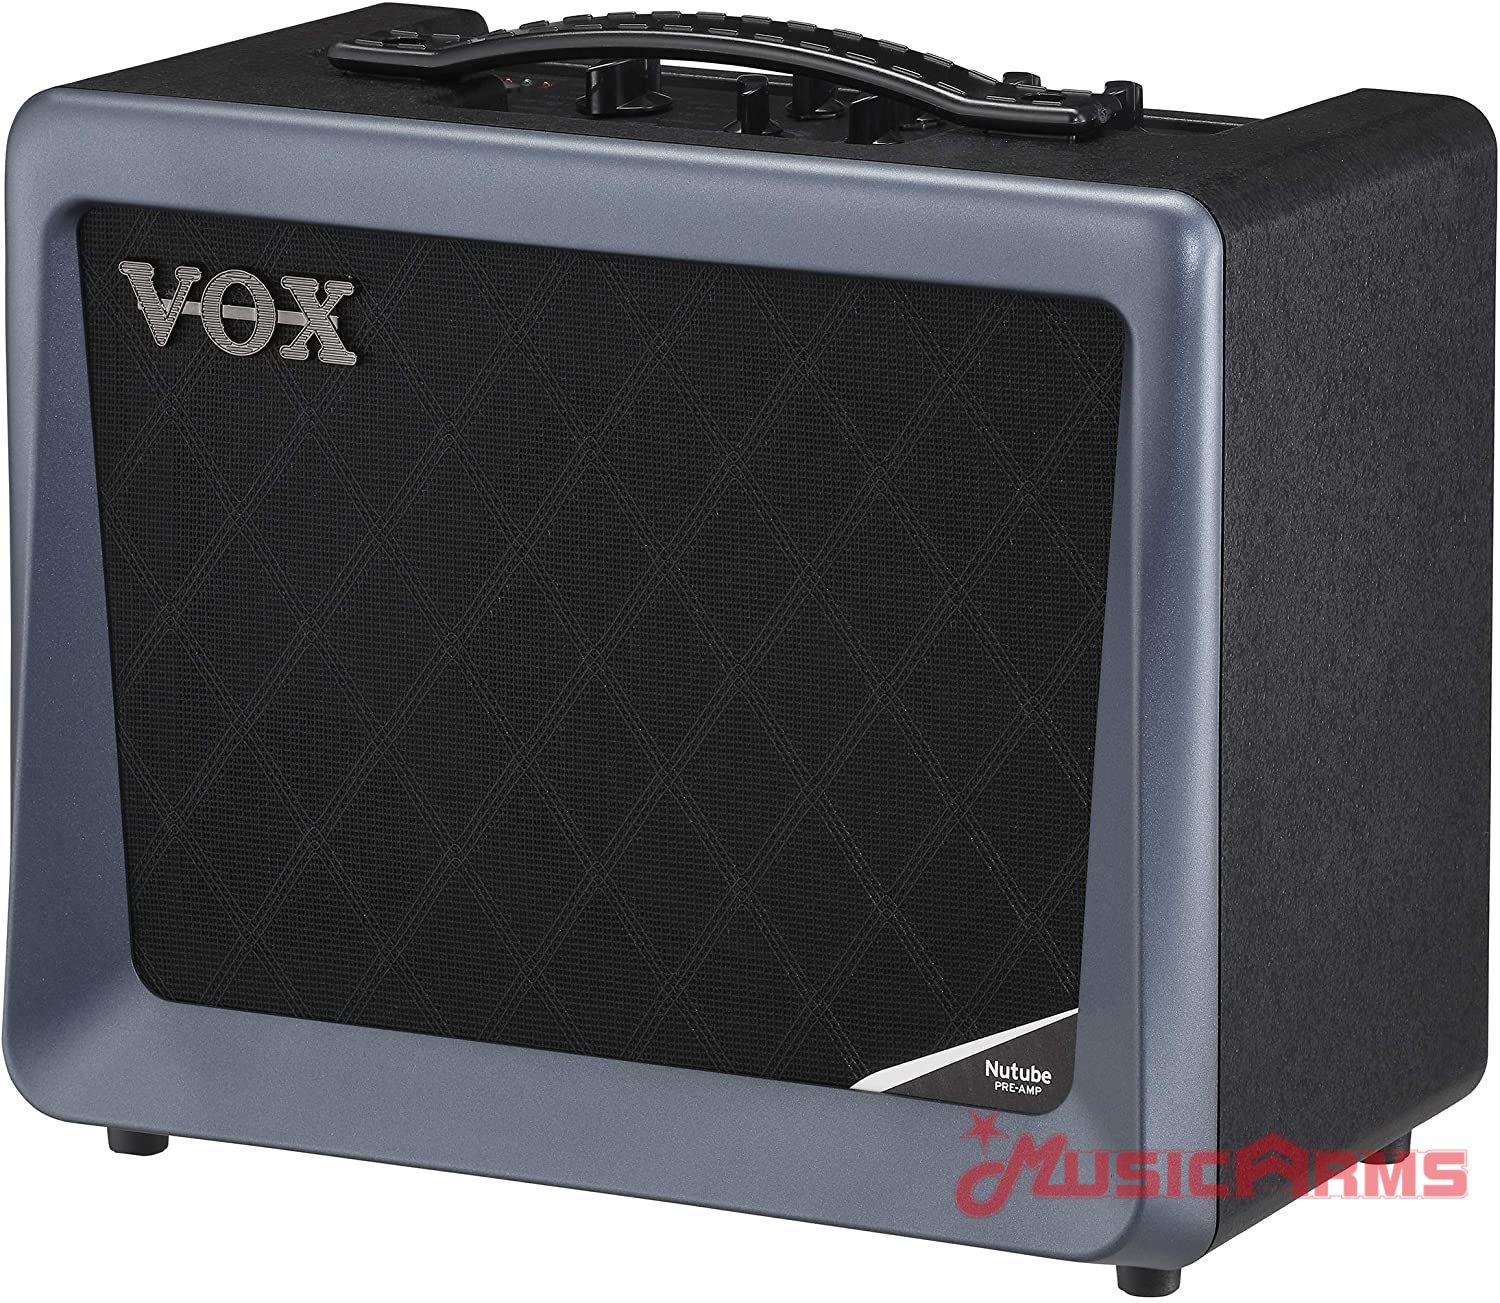 VOX VX50-GTV | Music Arms ศูนย์รวมเครื่องดนตรี ตั้งแต่เริ่มต้น ถึง 